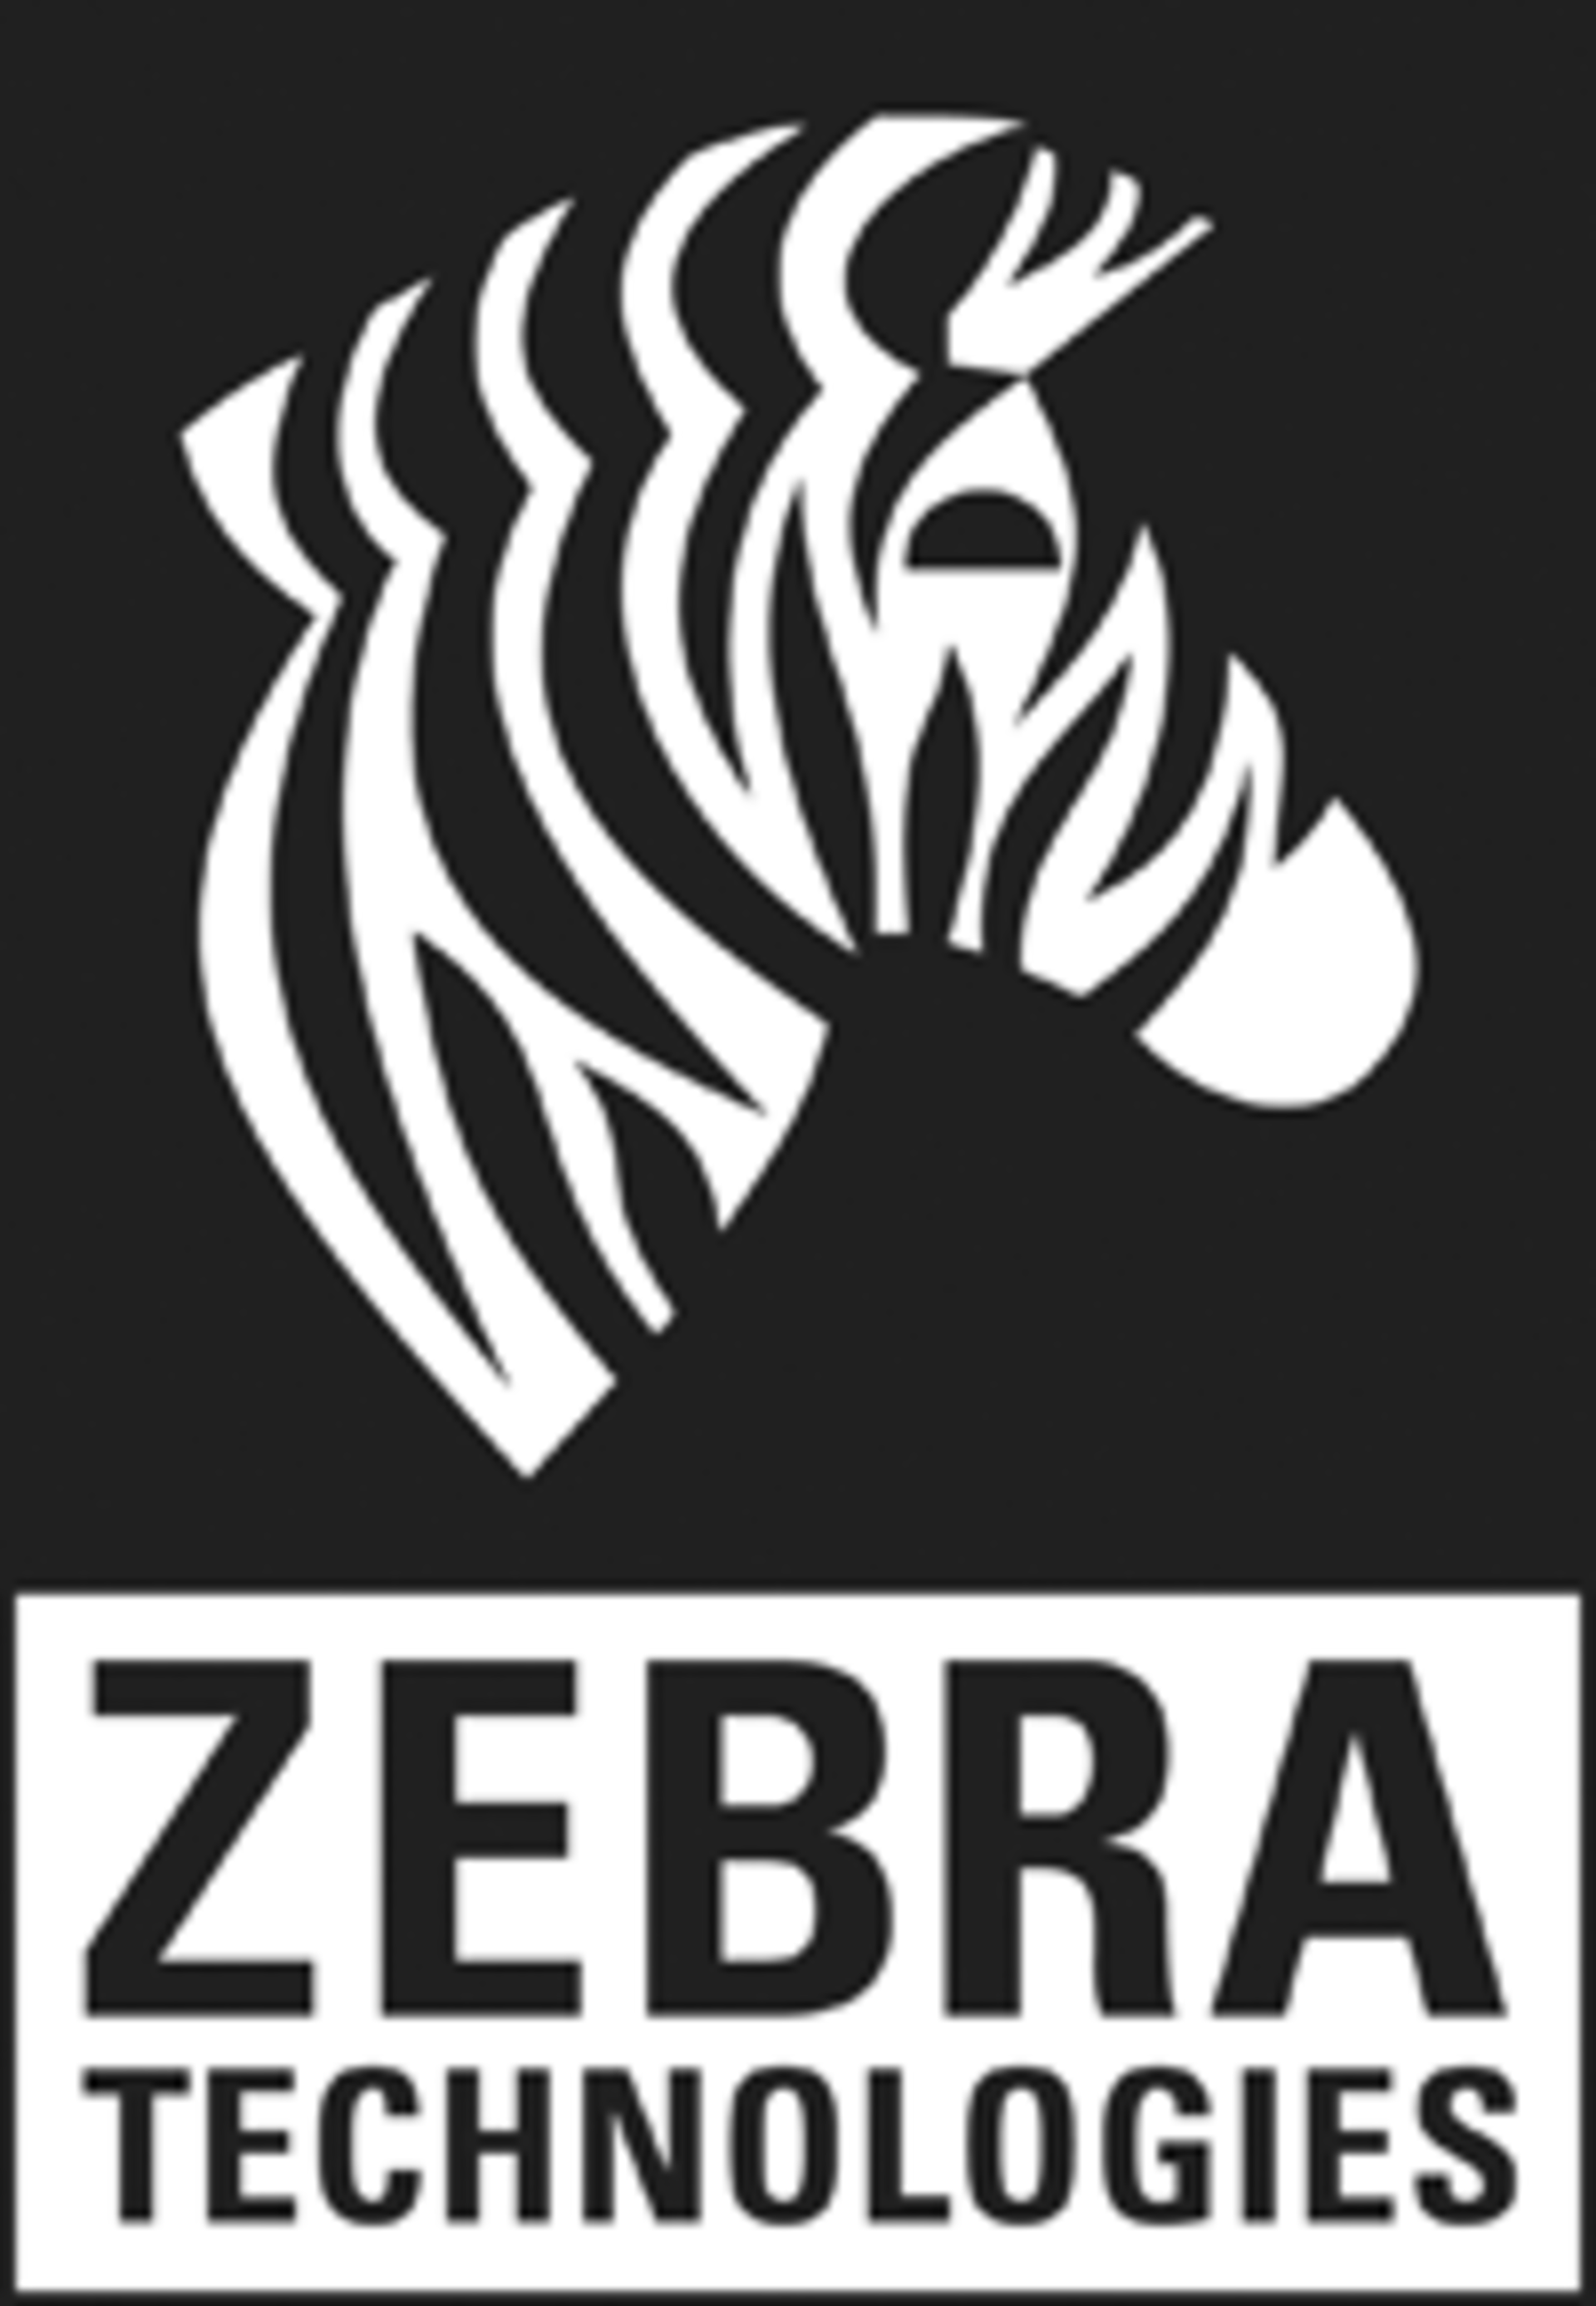 zebra technologies founded